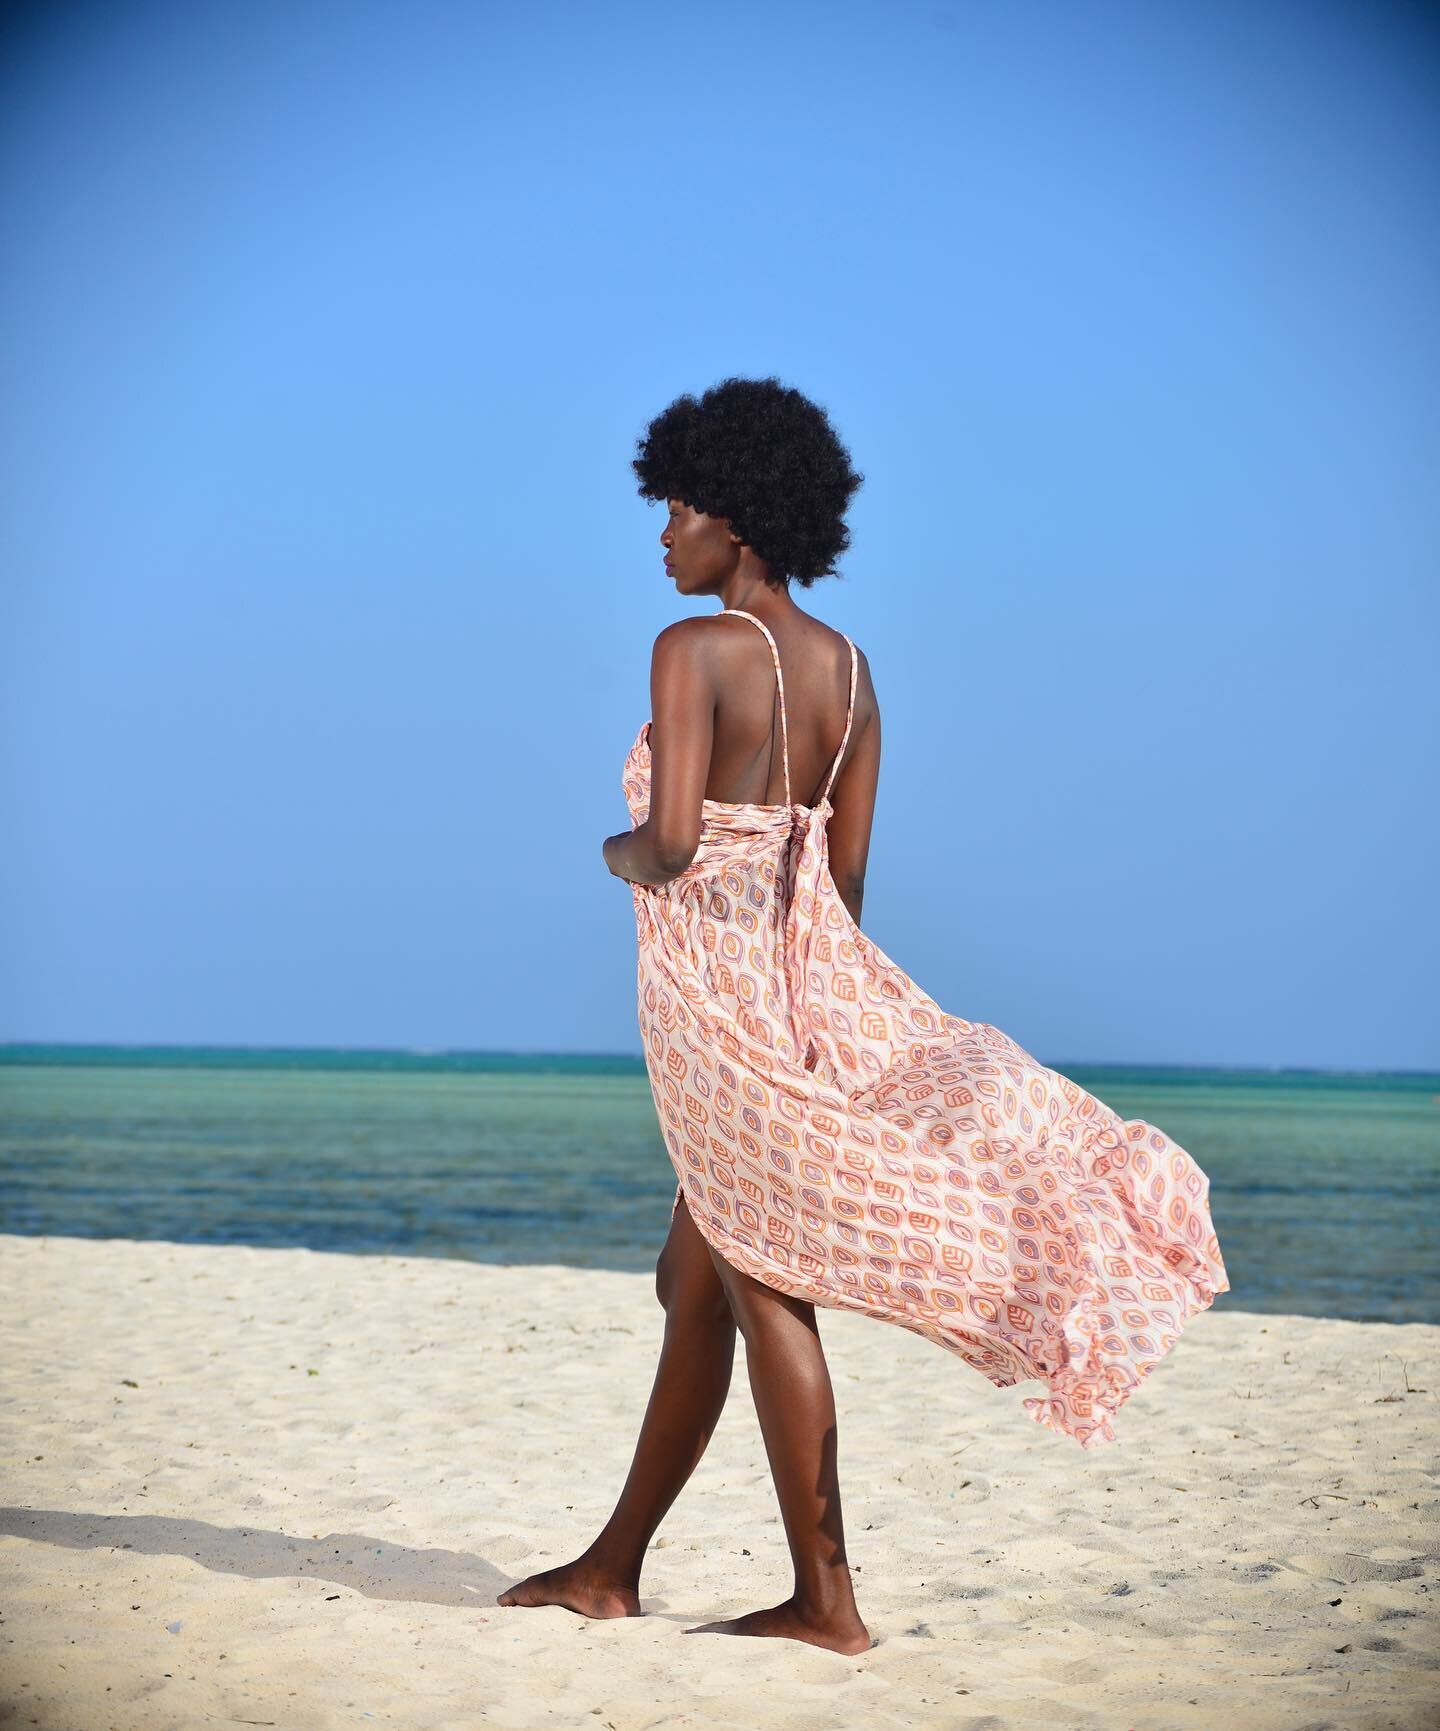 Abito Asia @nildaclothing 
Sei un rivenditore interessato al nostro Brand? Contattaci in Direct o invia una mail a info@nildaclothing.it
#look #lookoftheday #instagood #instalike #abitolungo #dresses #dressoftheday #mare #beach #beachwear #kenya #pes